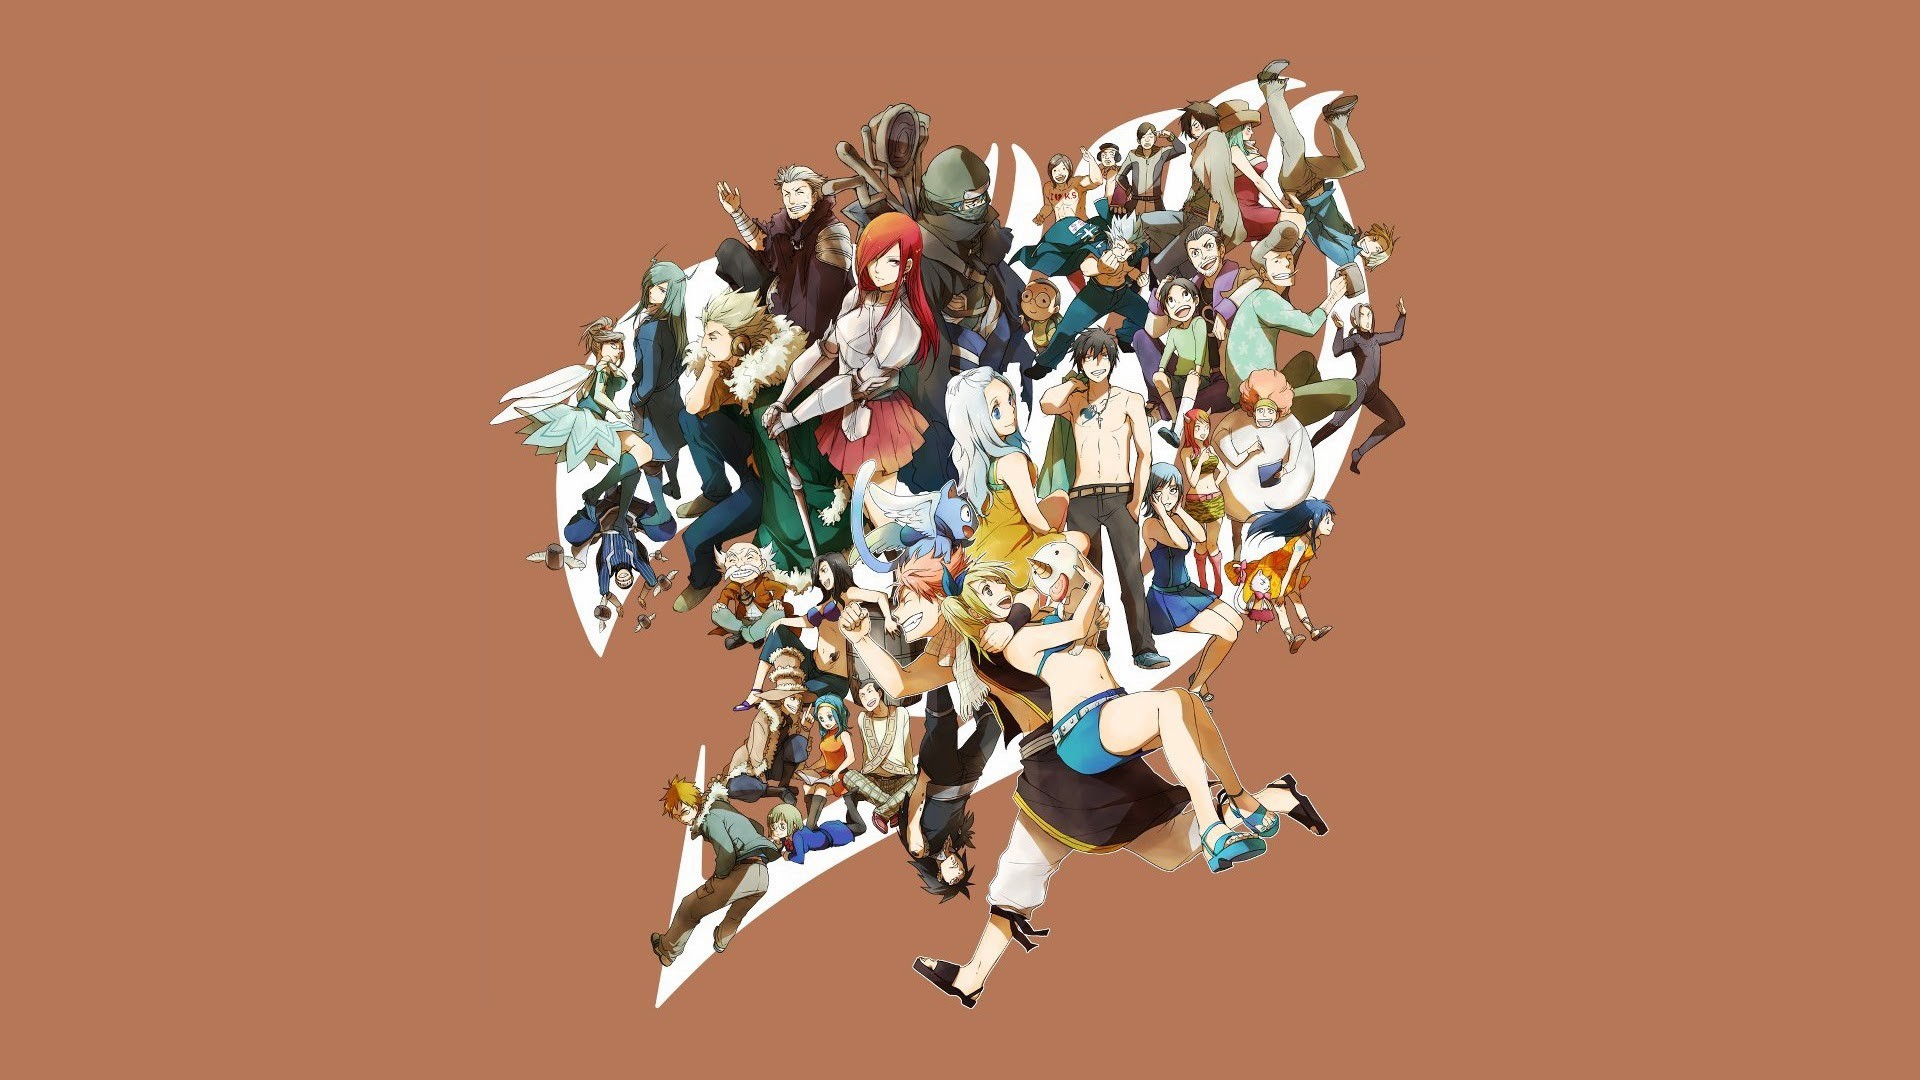 1920x1080  Fairy Tail Logo Hd Wallpapers Wide All Wallpaper Desktop   px 293.11 KB anime Dragon Slayer